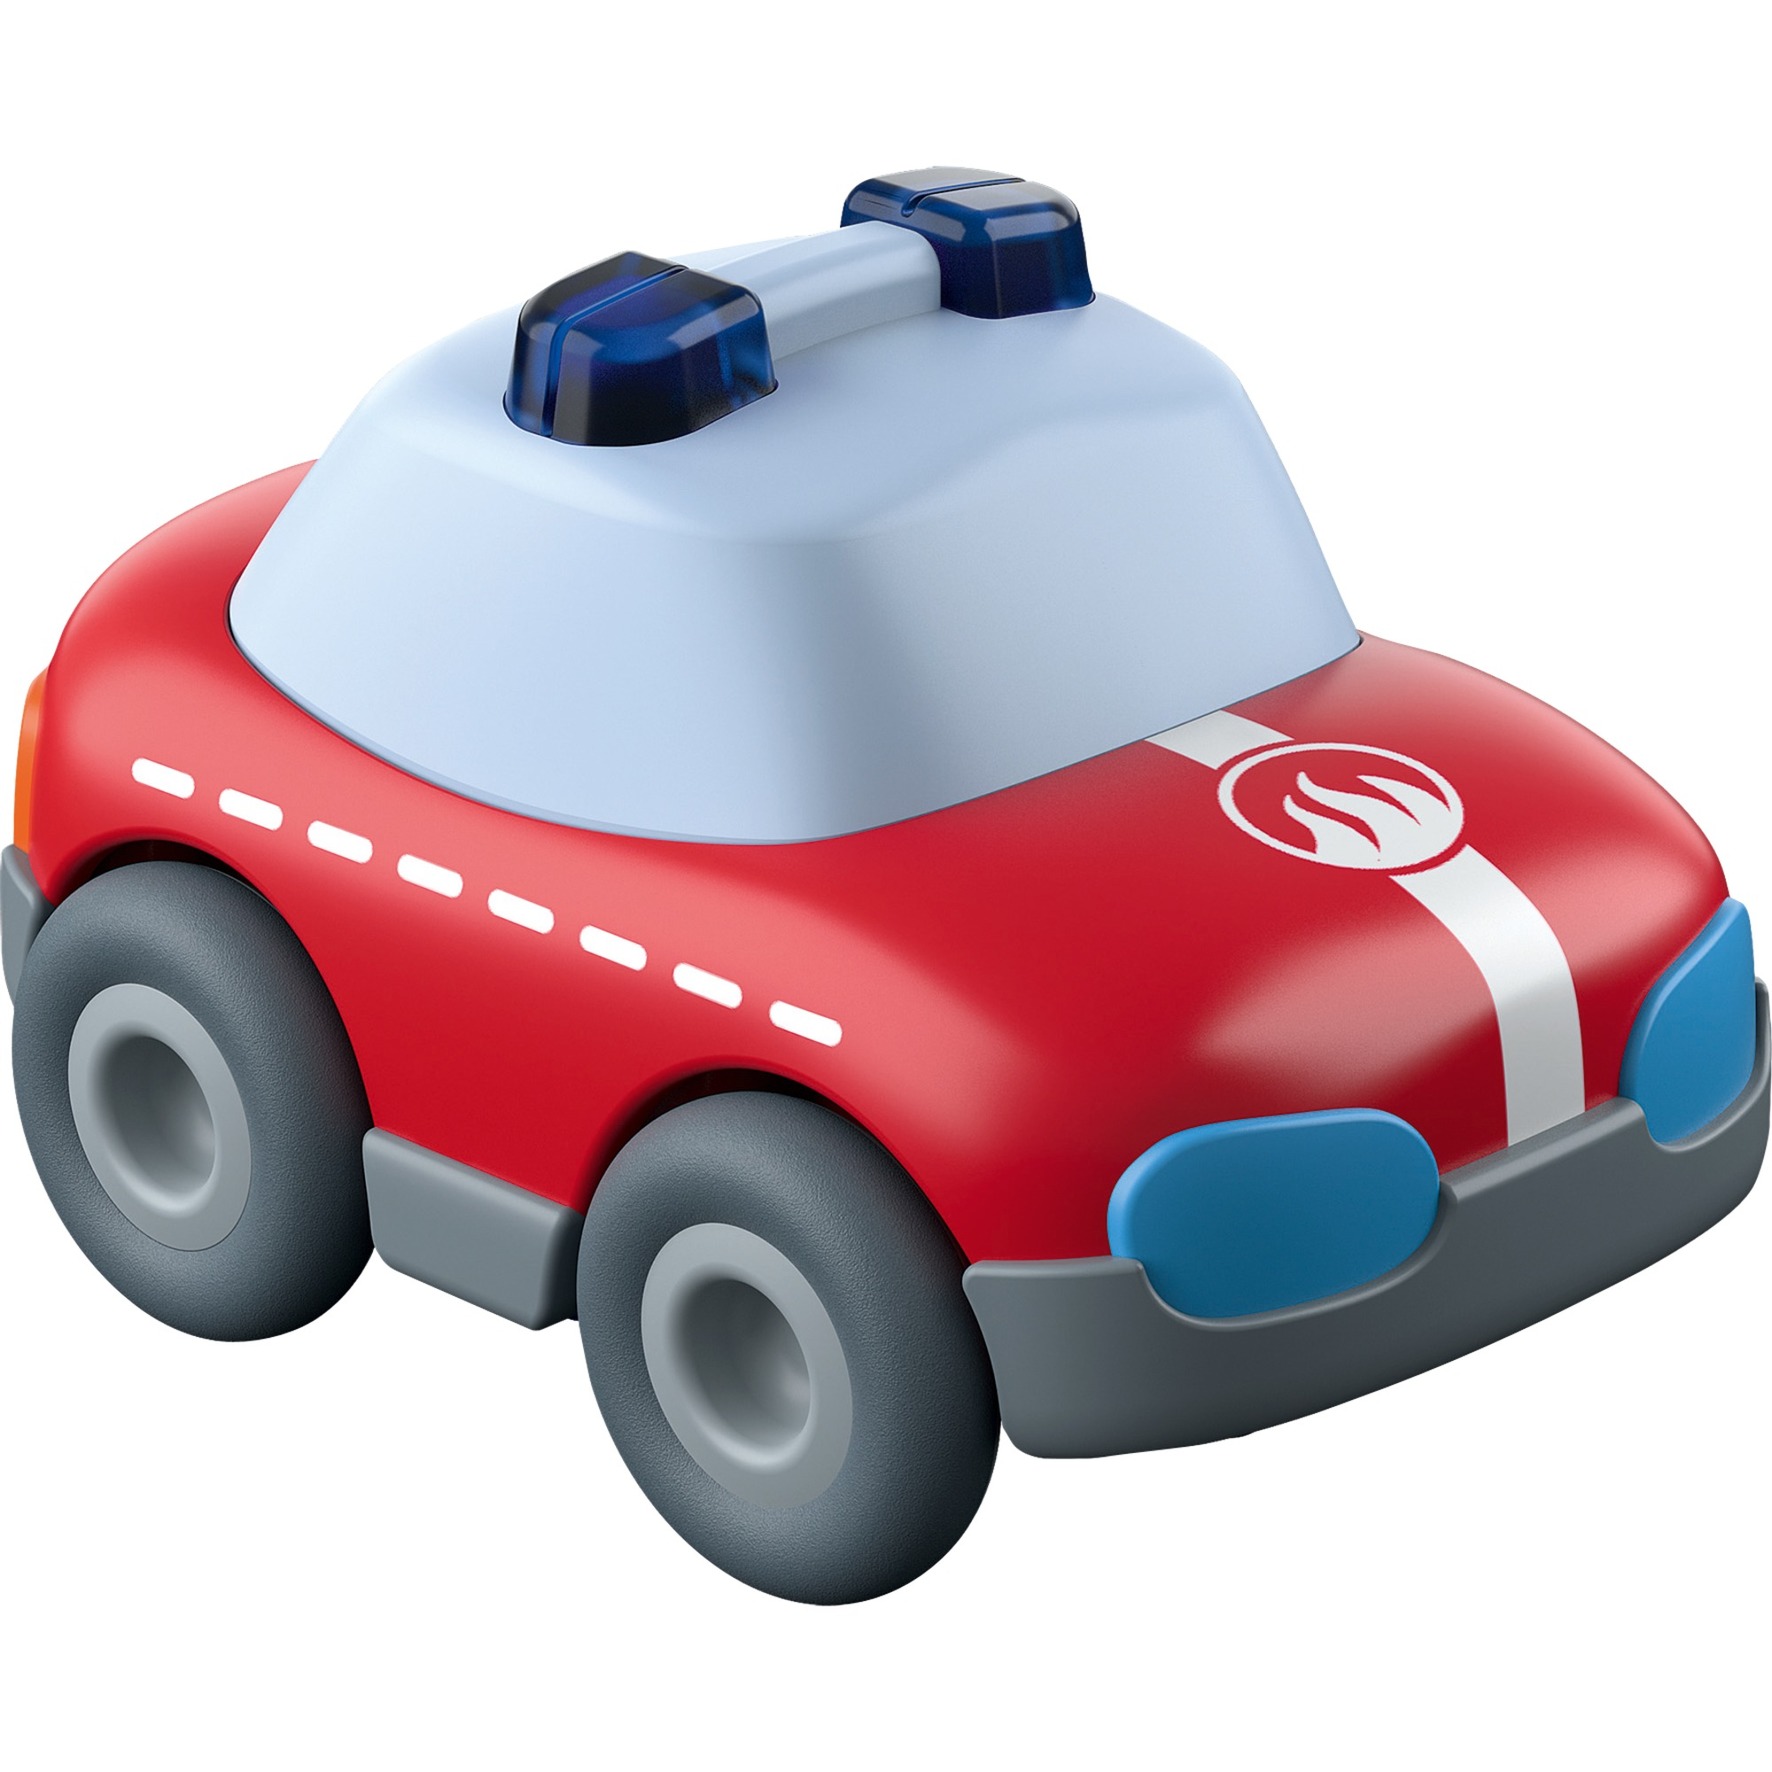 302974, Toy vehicle